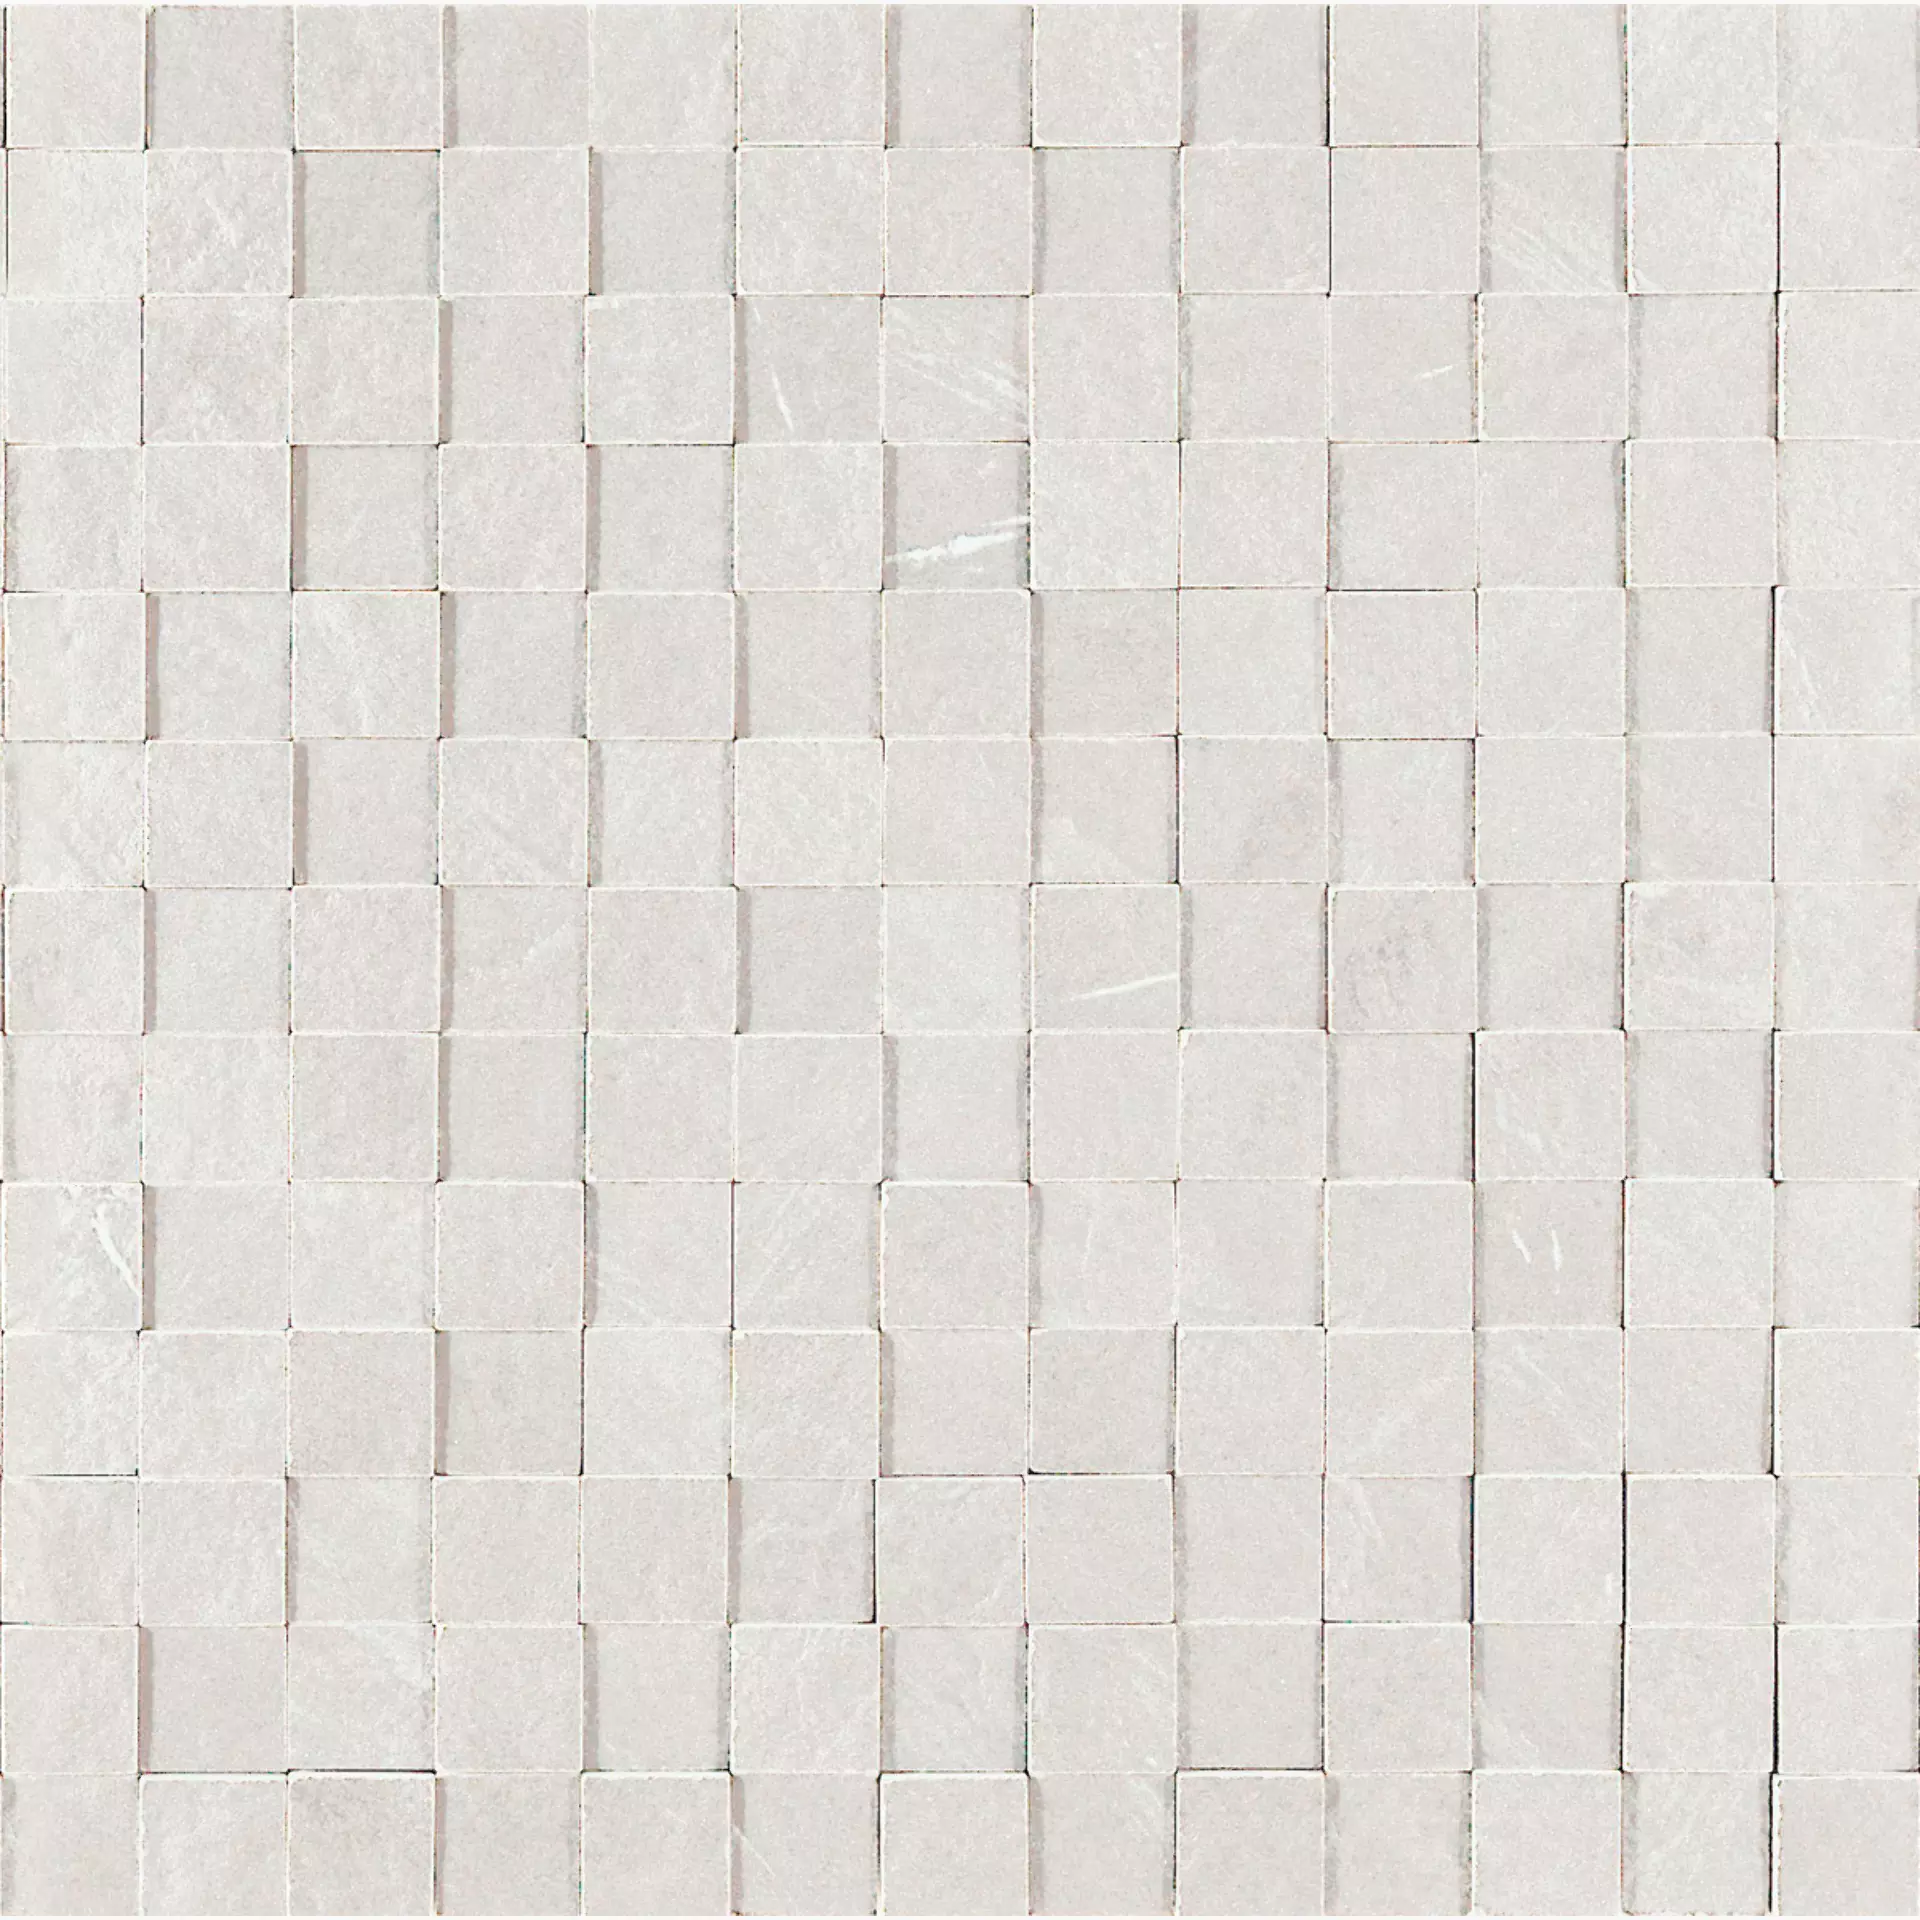 Bodenfliese,Wandfliese Marazzi Mystone Lavagna Bianco Naturale – Matt Bianco MD1H matt natur 30x30cm Mosaik 3D 10mm